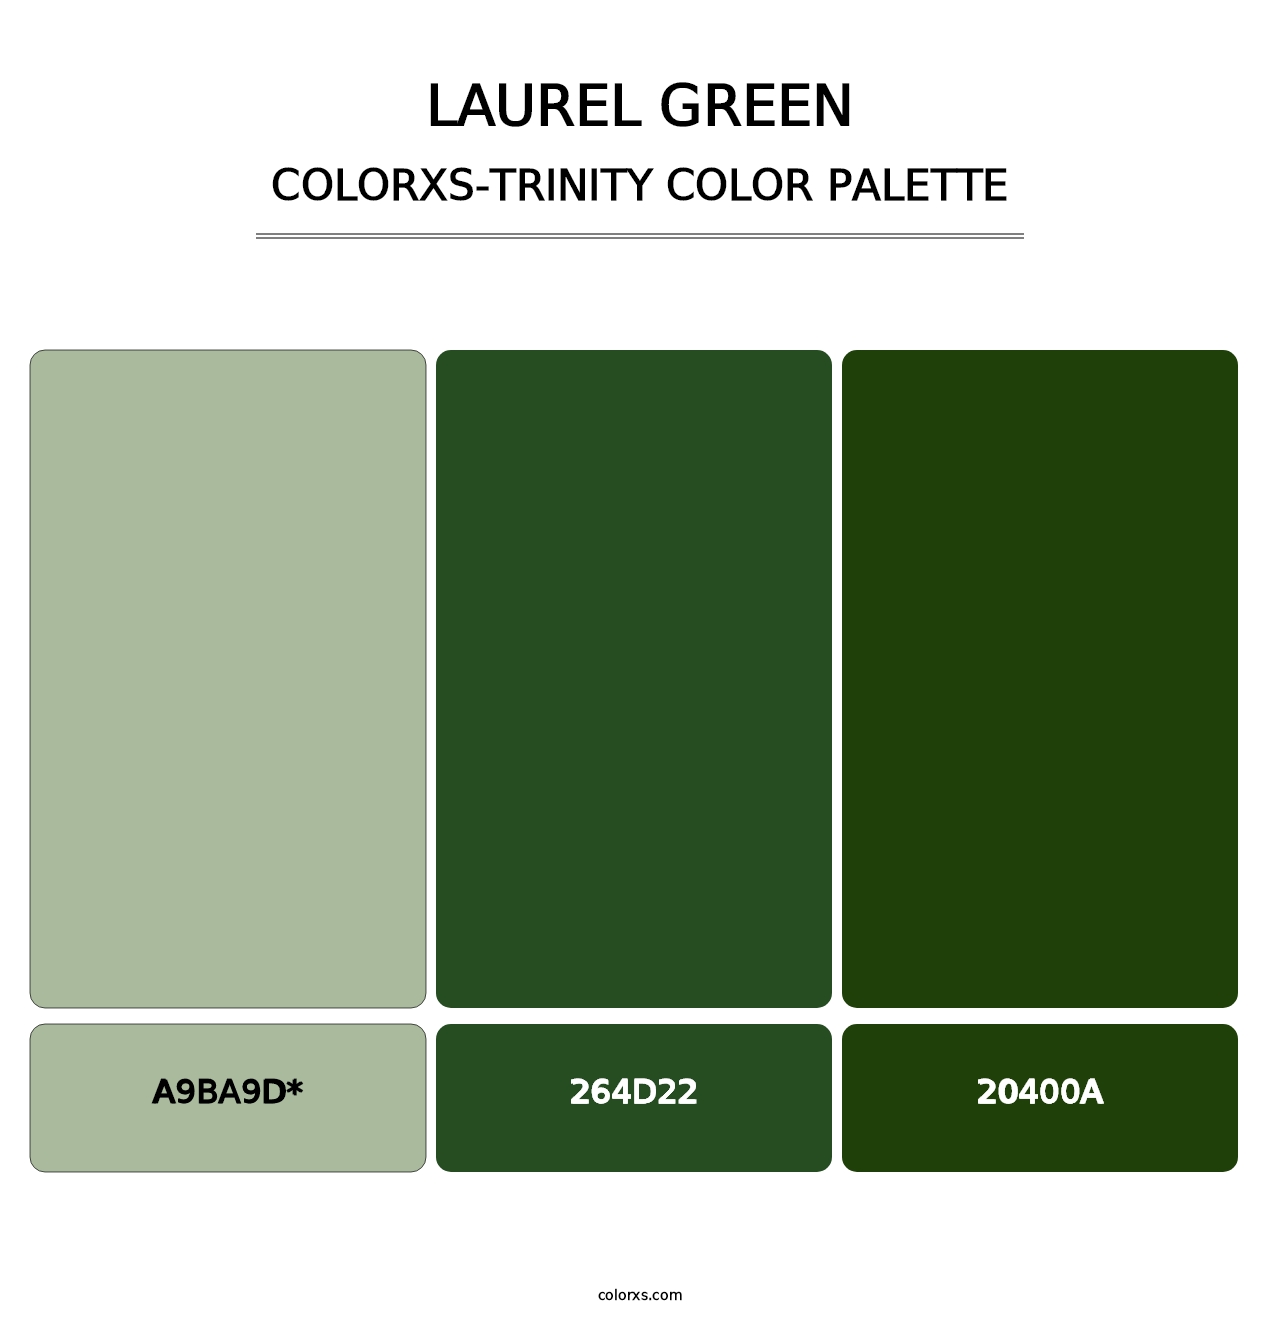 Laurel Green - Colorxs Trinity Palette